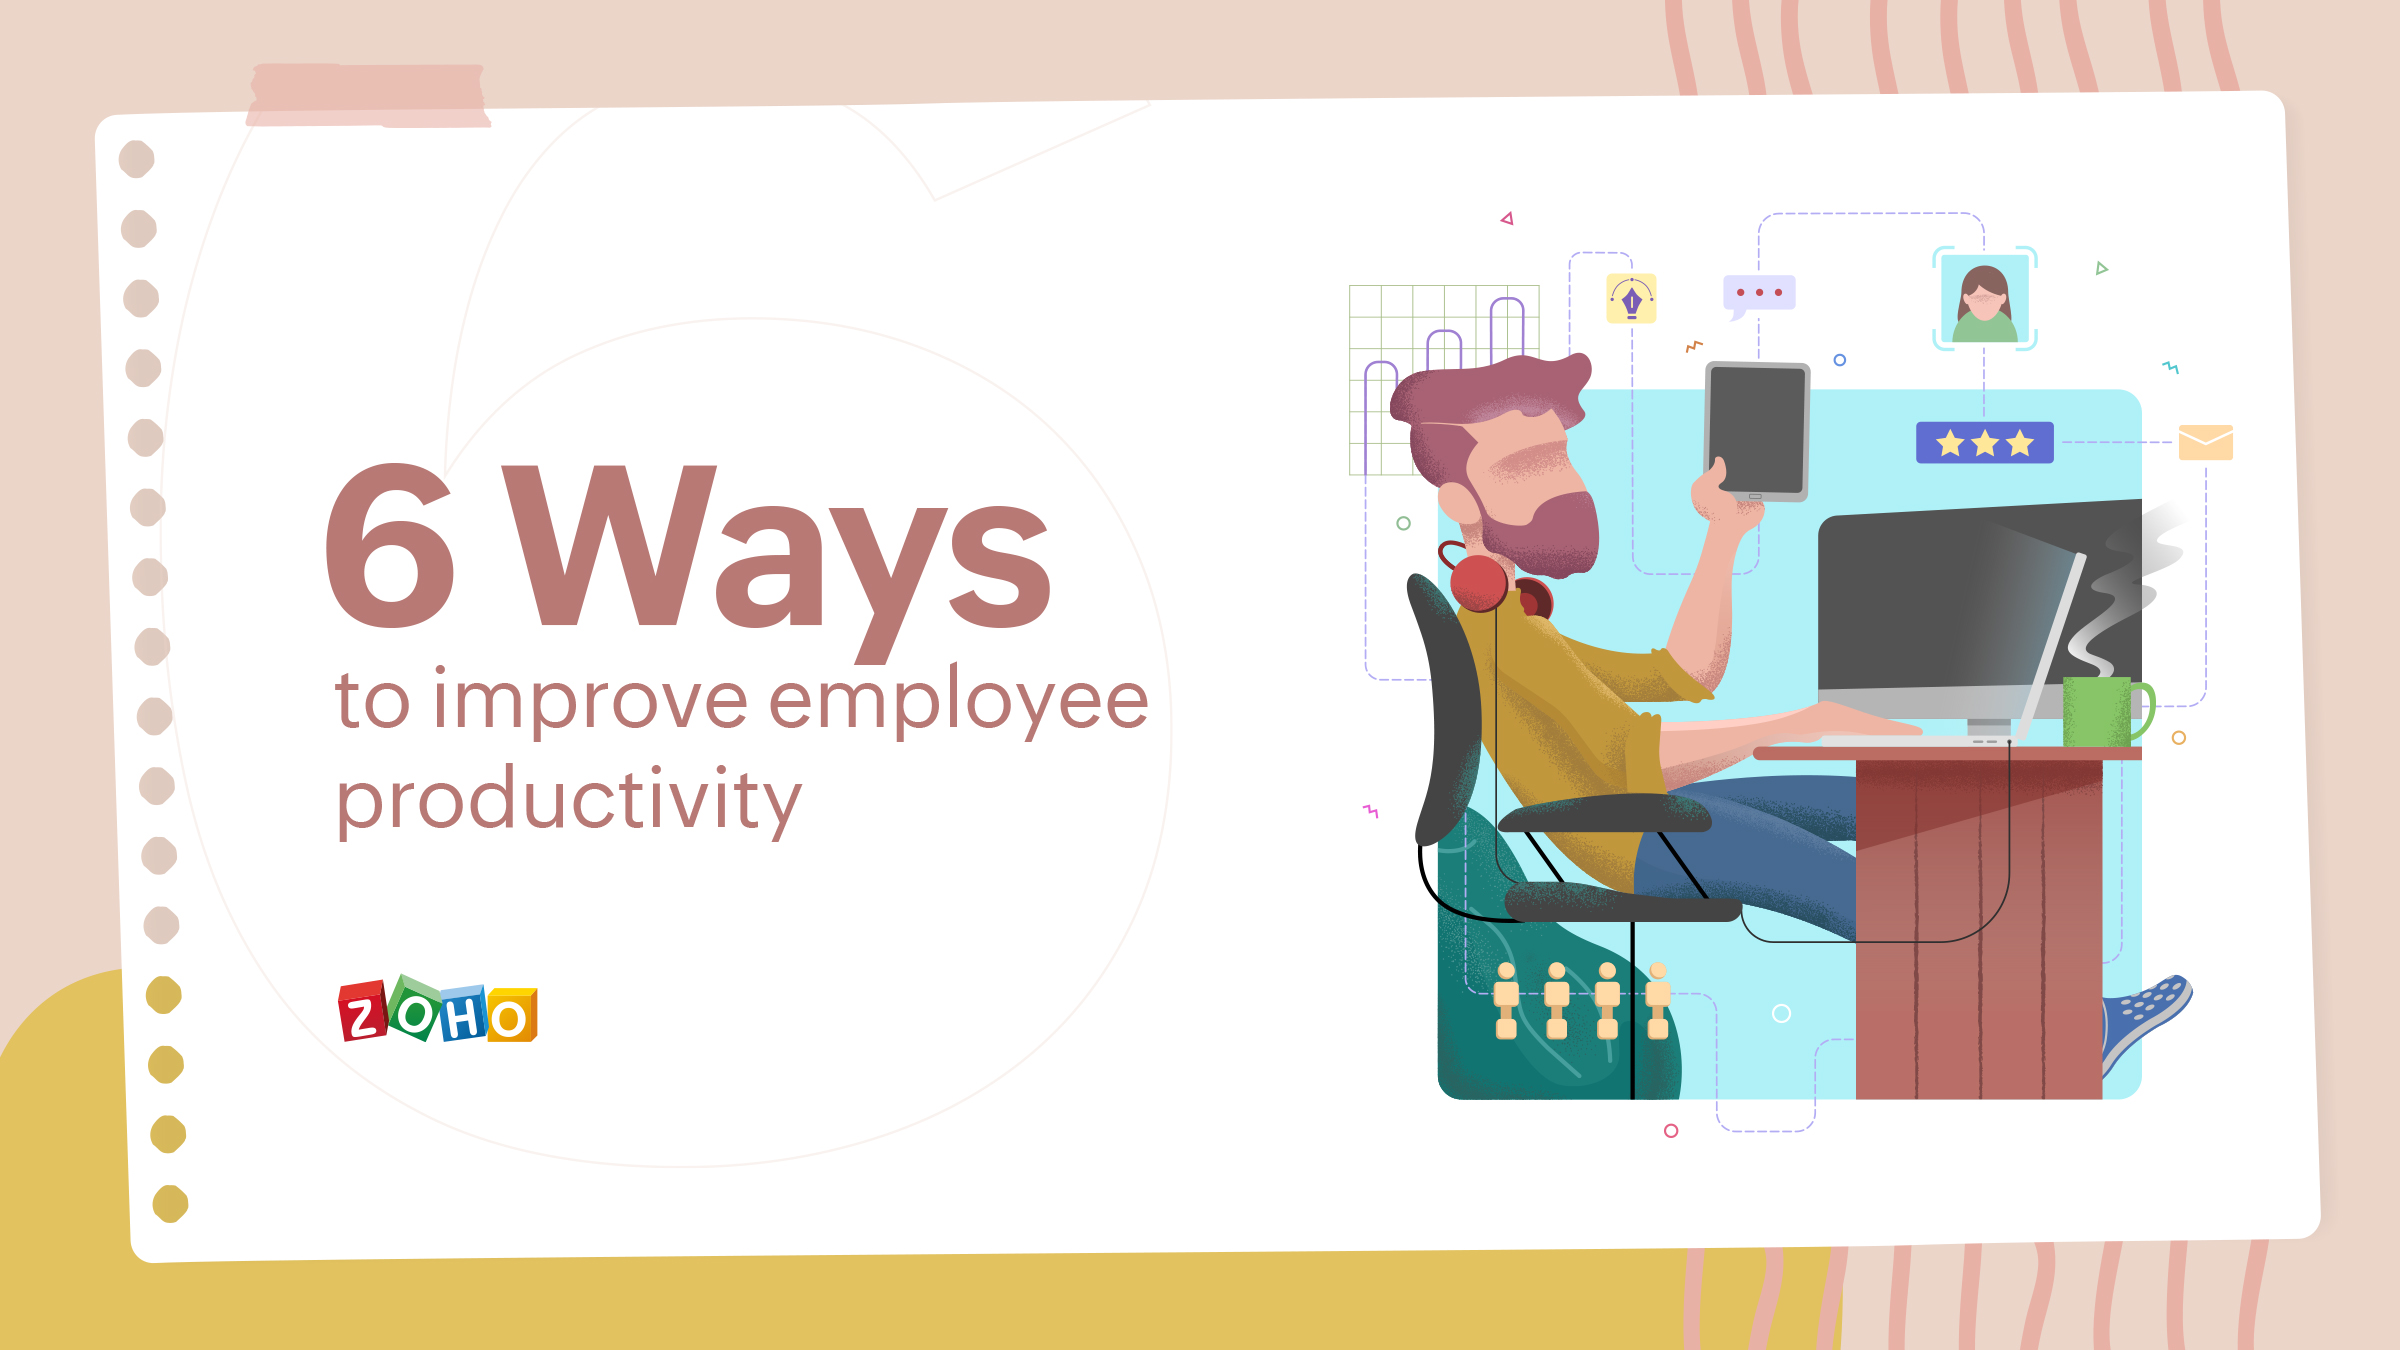 6 Ways to improve employee productivity